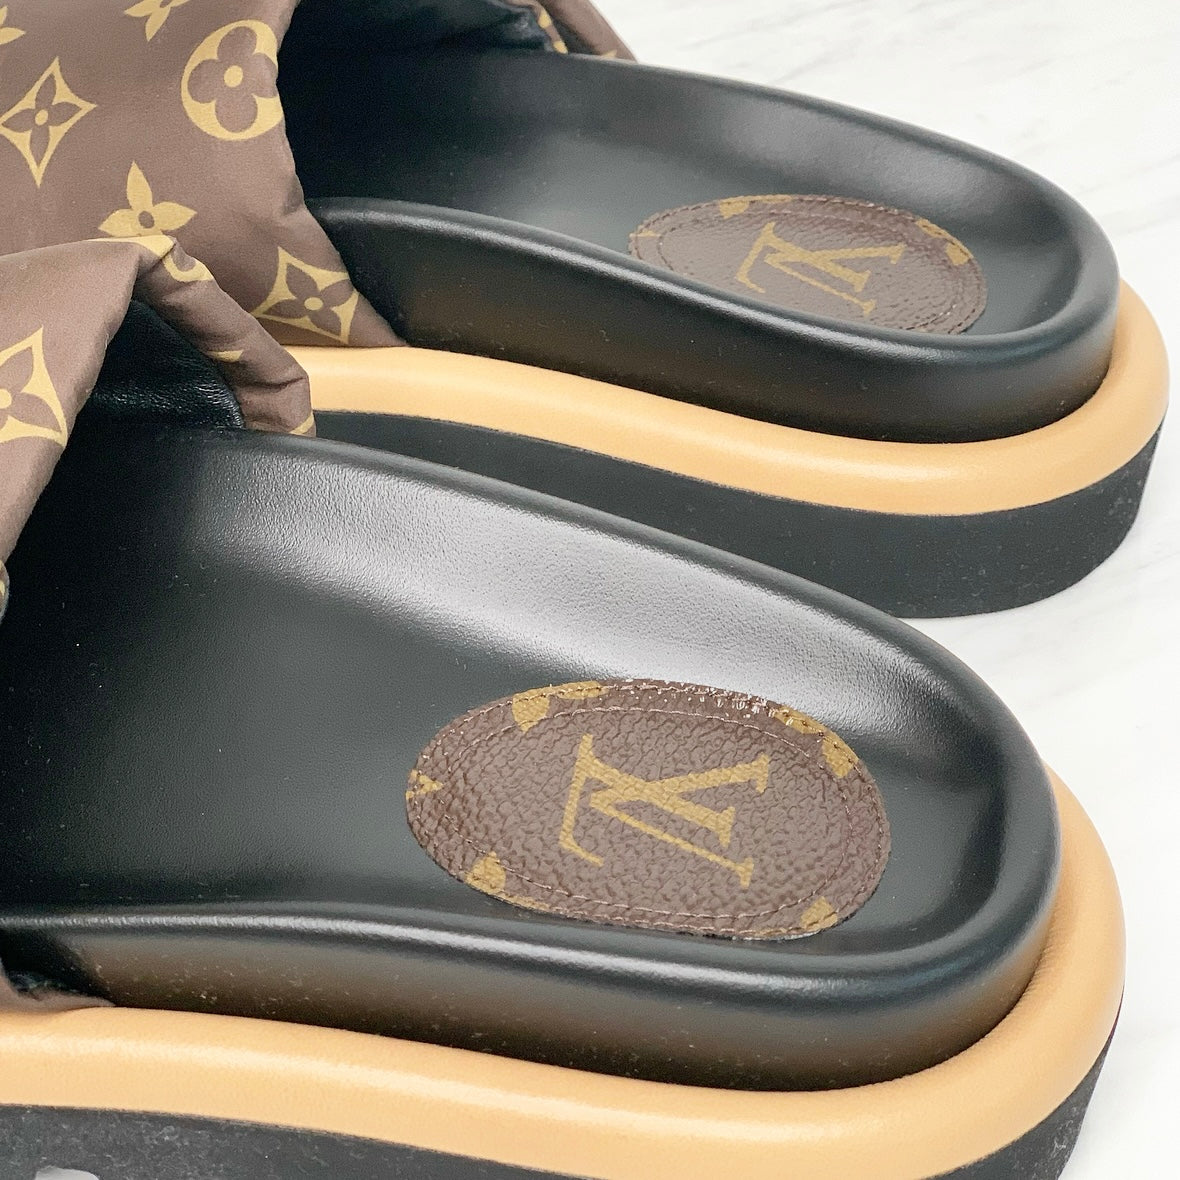 Louis Vuitton Pool Pillow Comfort Mules (Black)